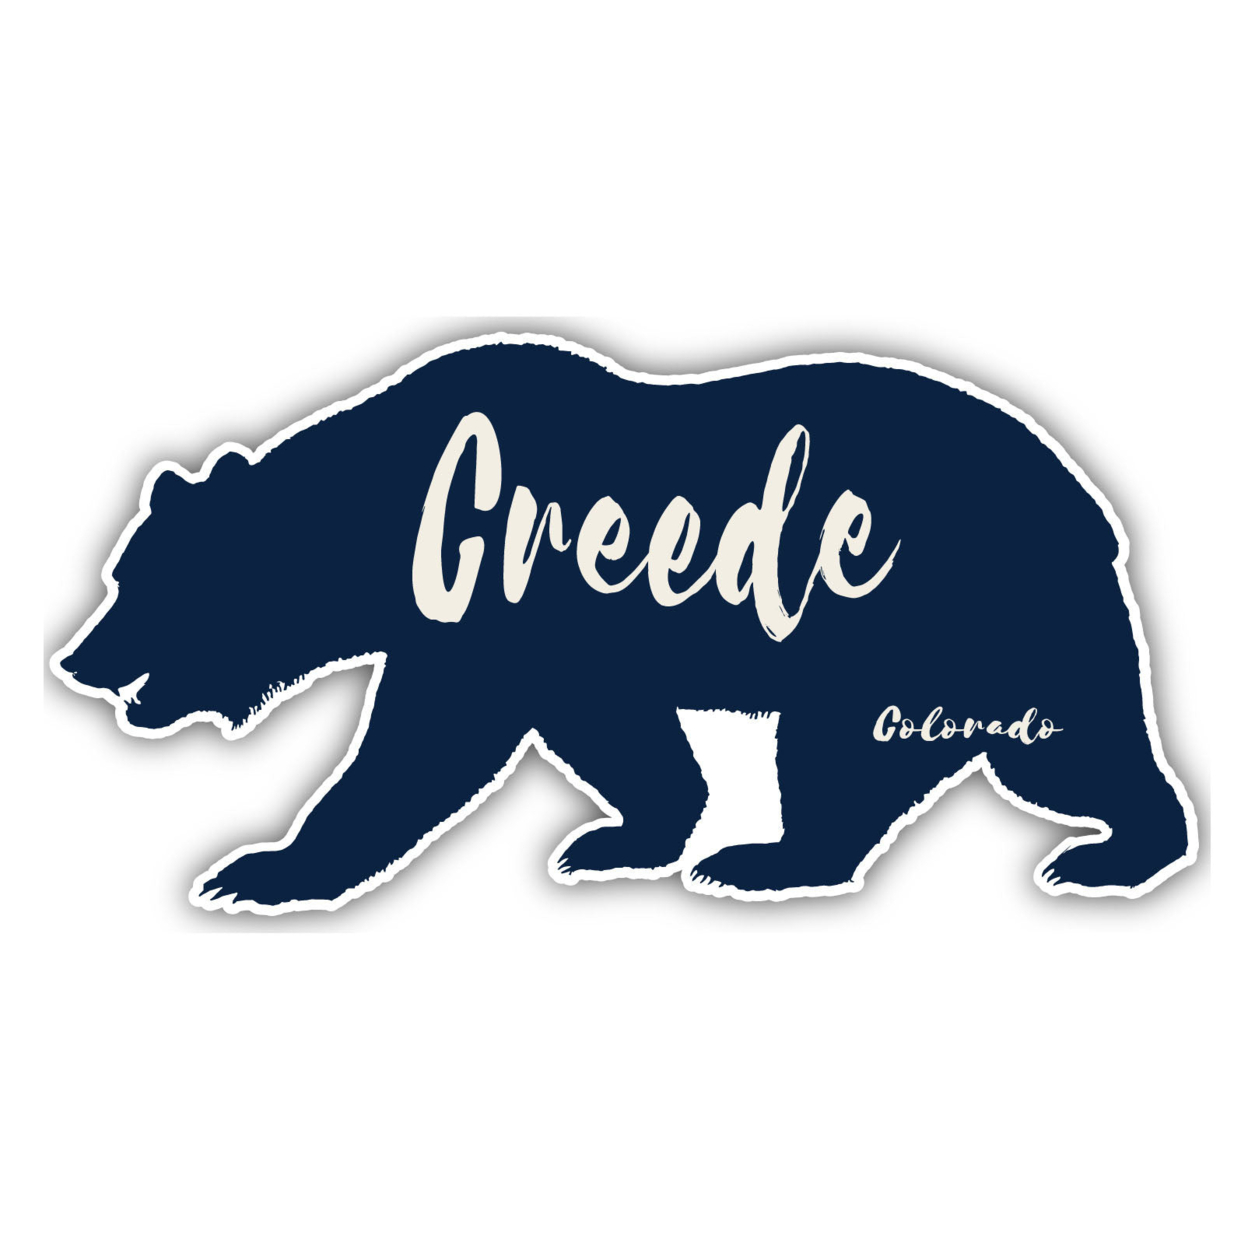 Creede Colorado Souvenir Decorative Stickers (Choose Theme And Size) - Single Unit, 4-Inch, Bear